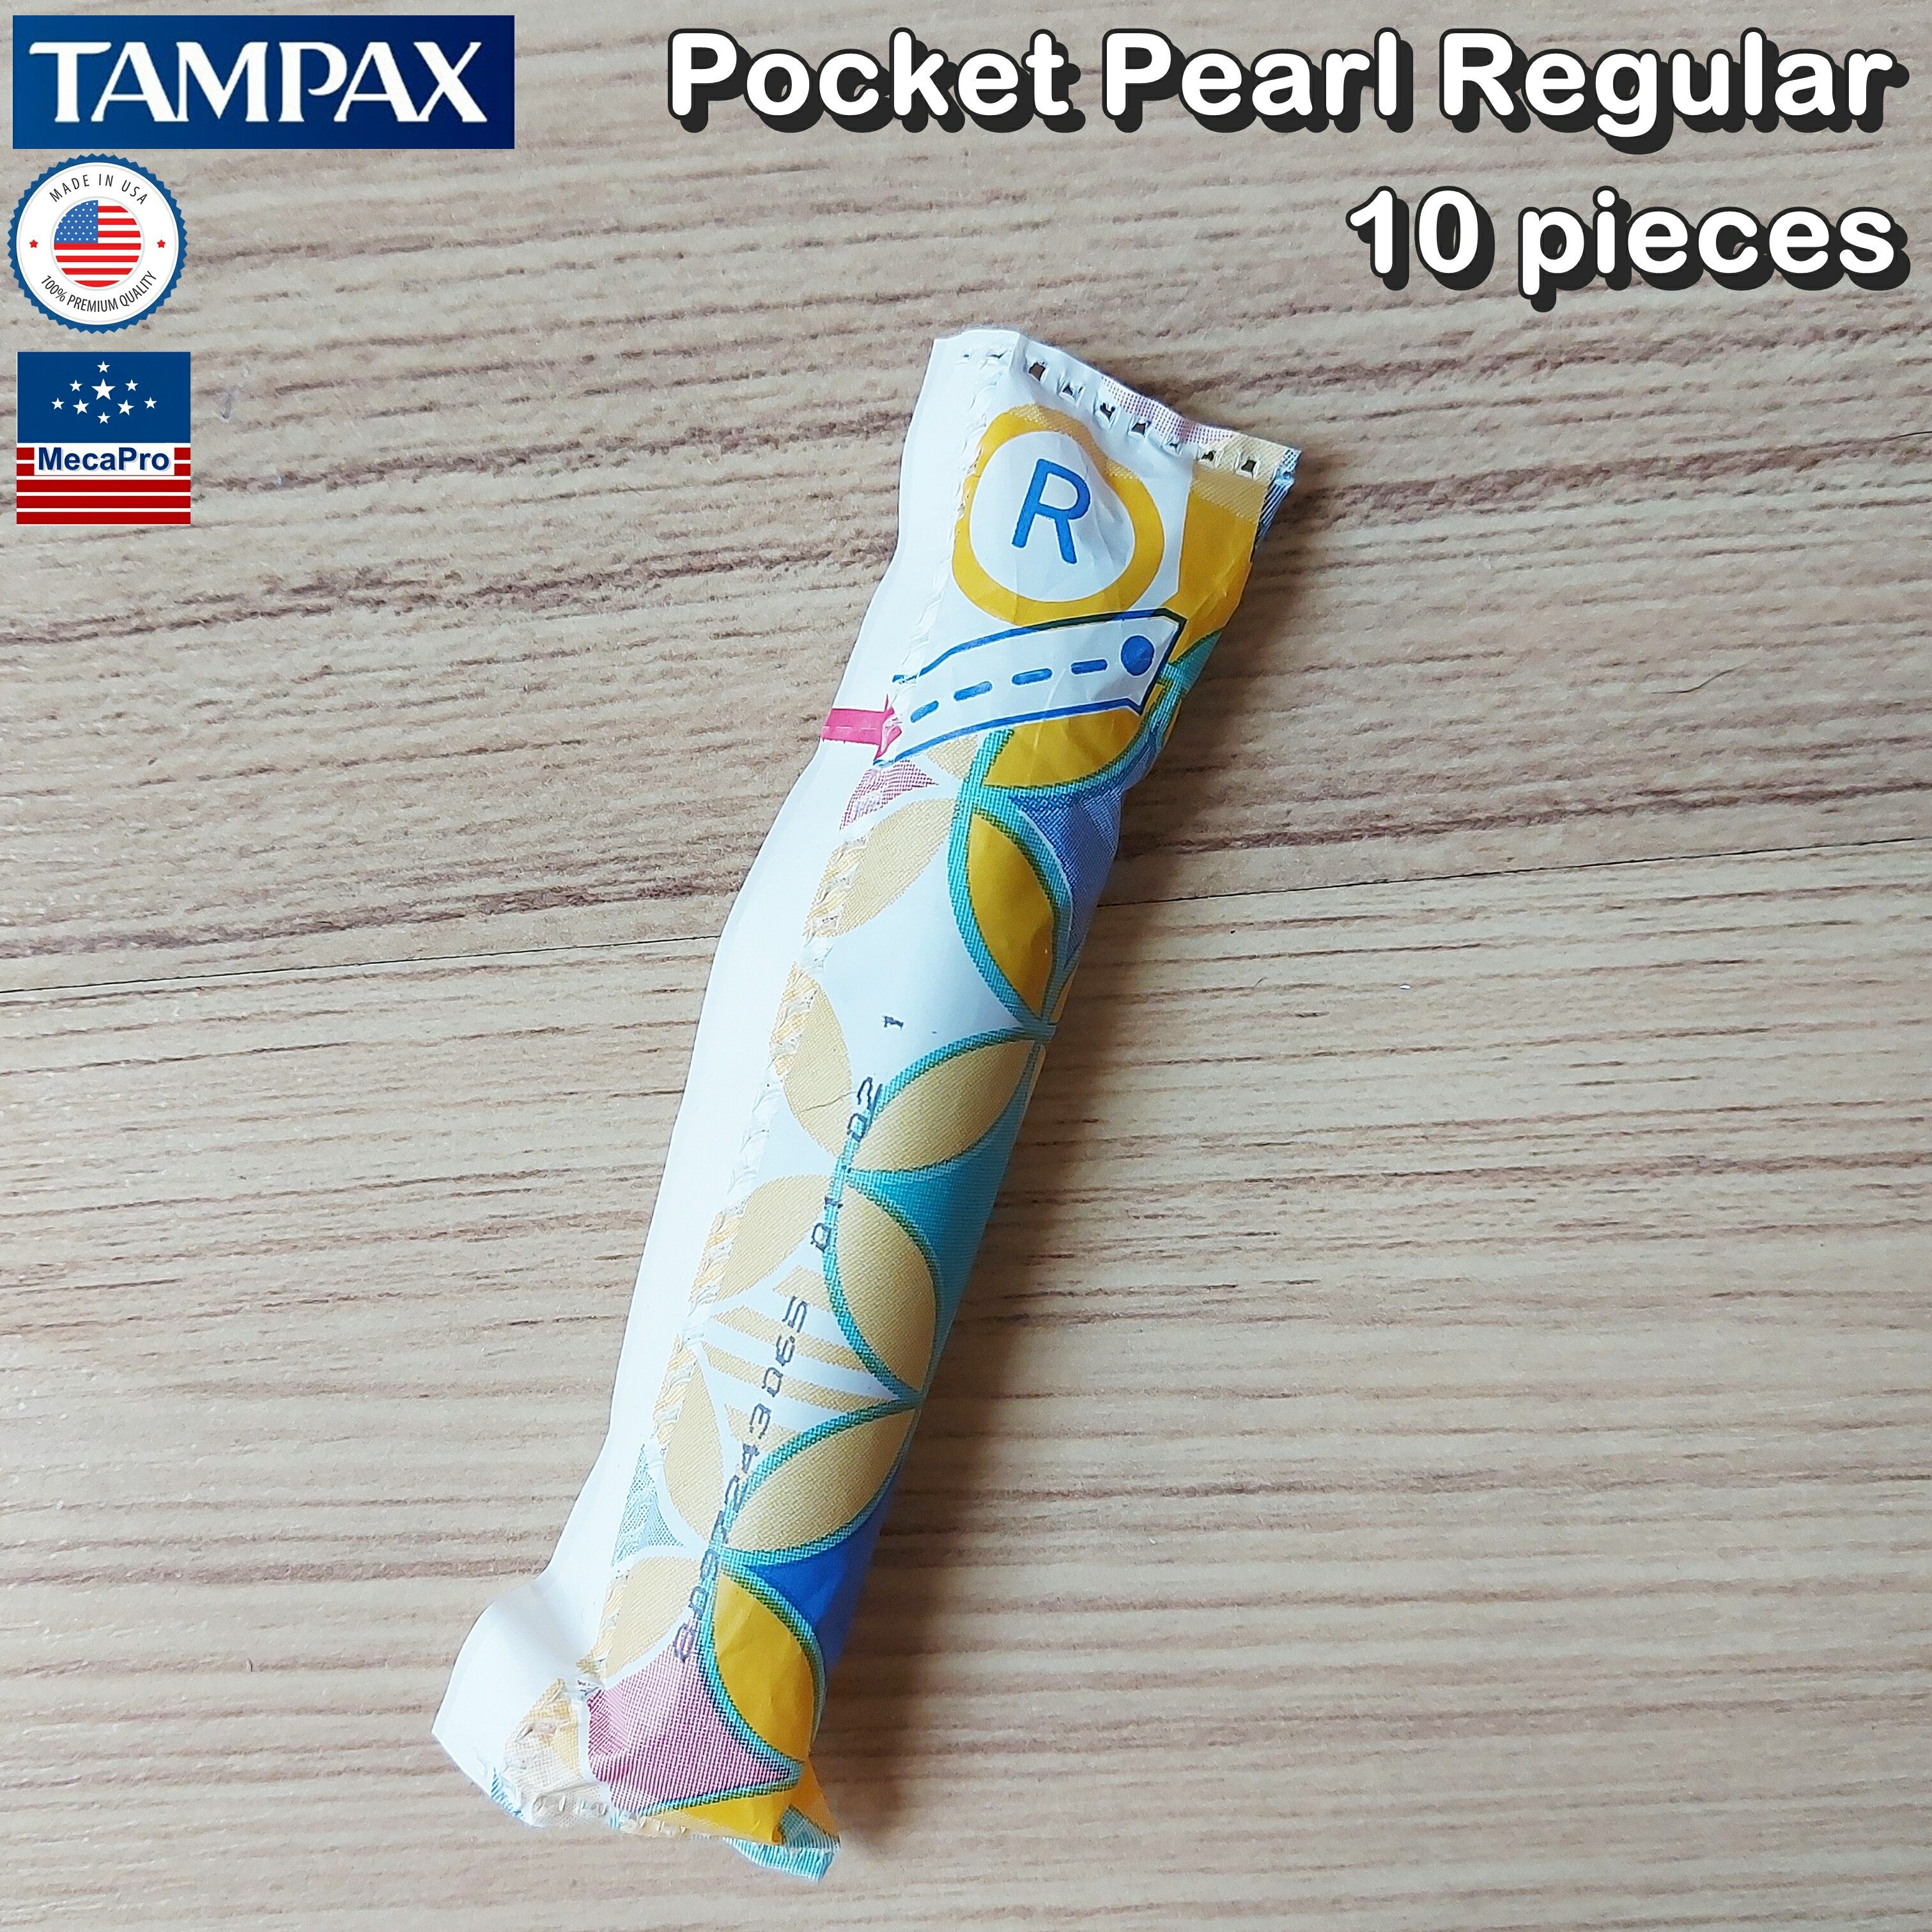 Tampax® Pocket Pearl Plastic Tampons Regular 10 pieces ผ้าอนามัยแบบสอด 10 ชิ้น เหมาะกับวันมาปกติ